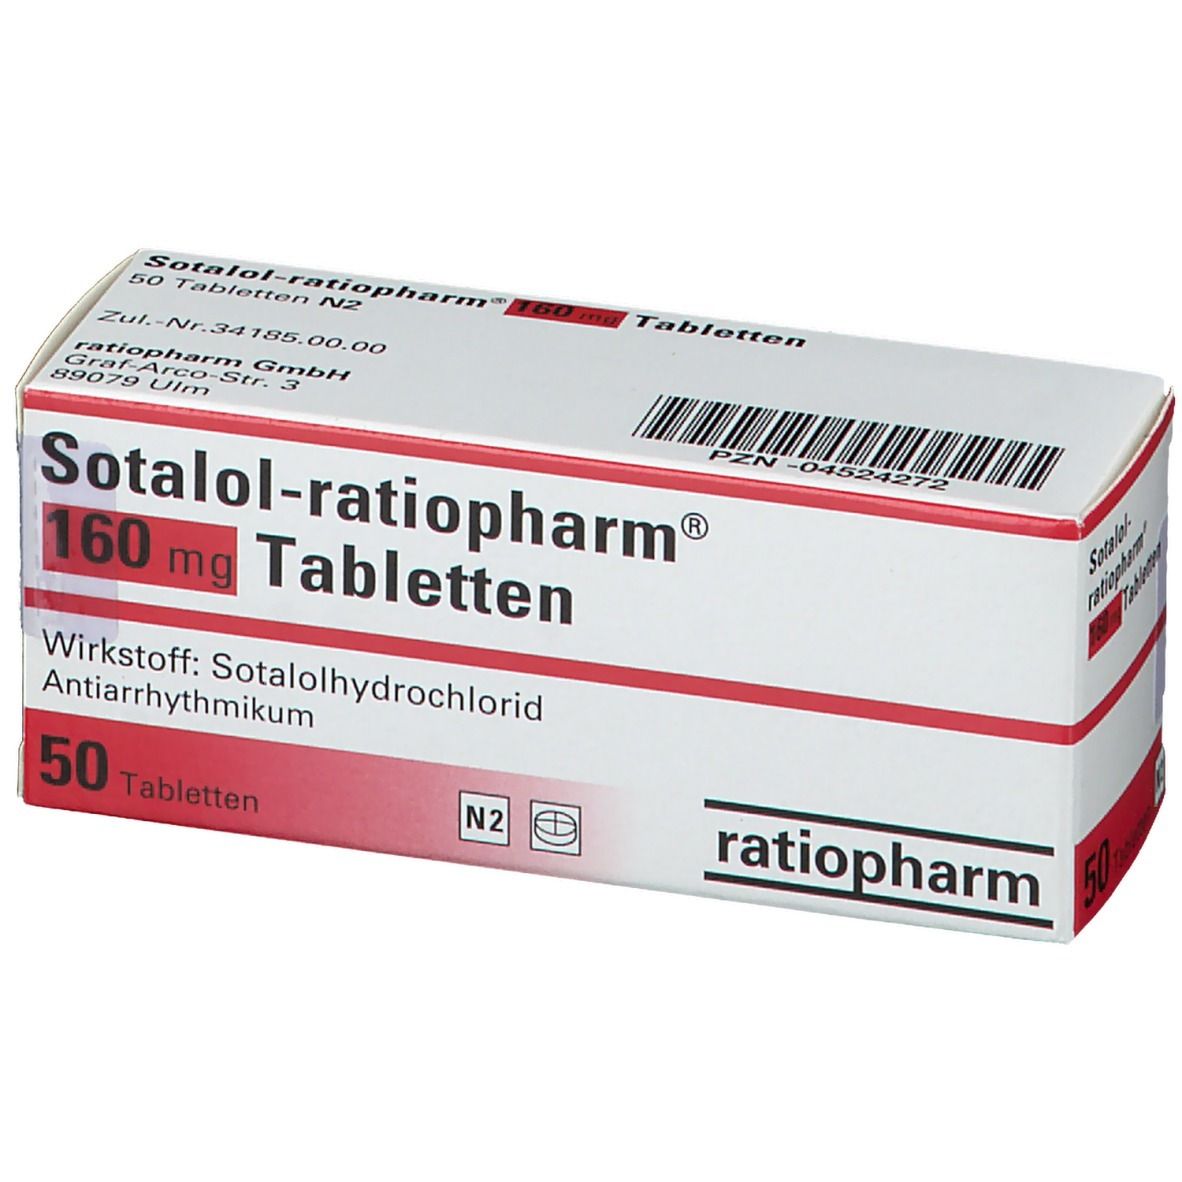 Sotalol-ratiopharm® 160 mg